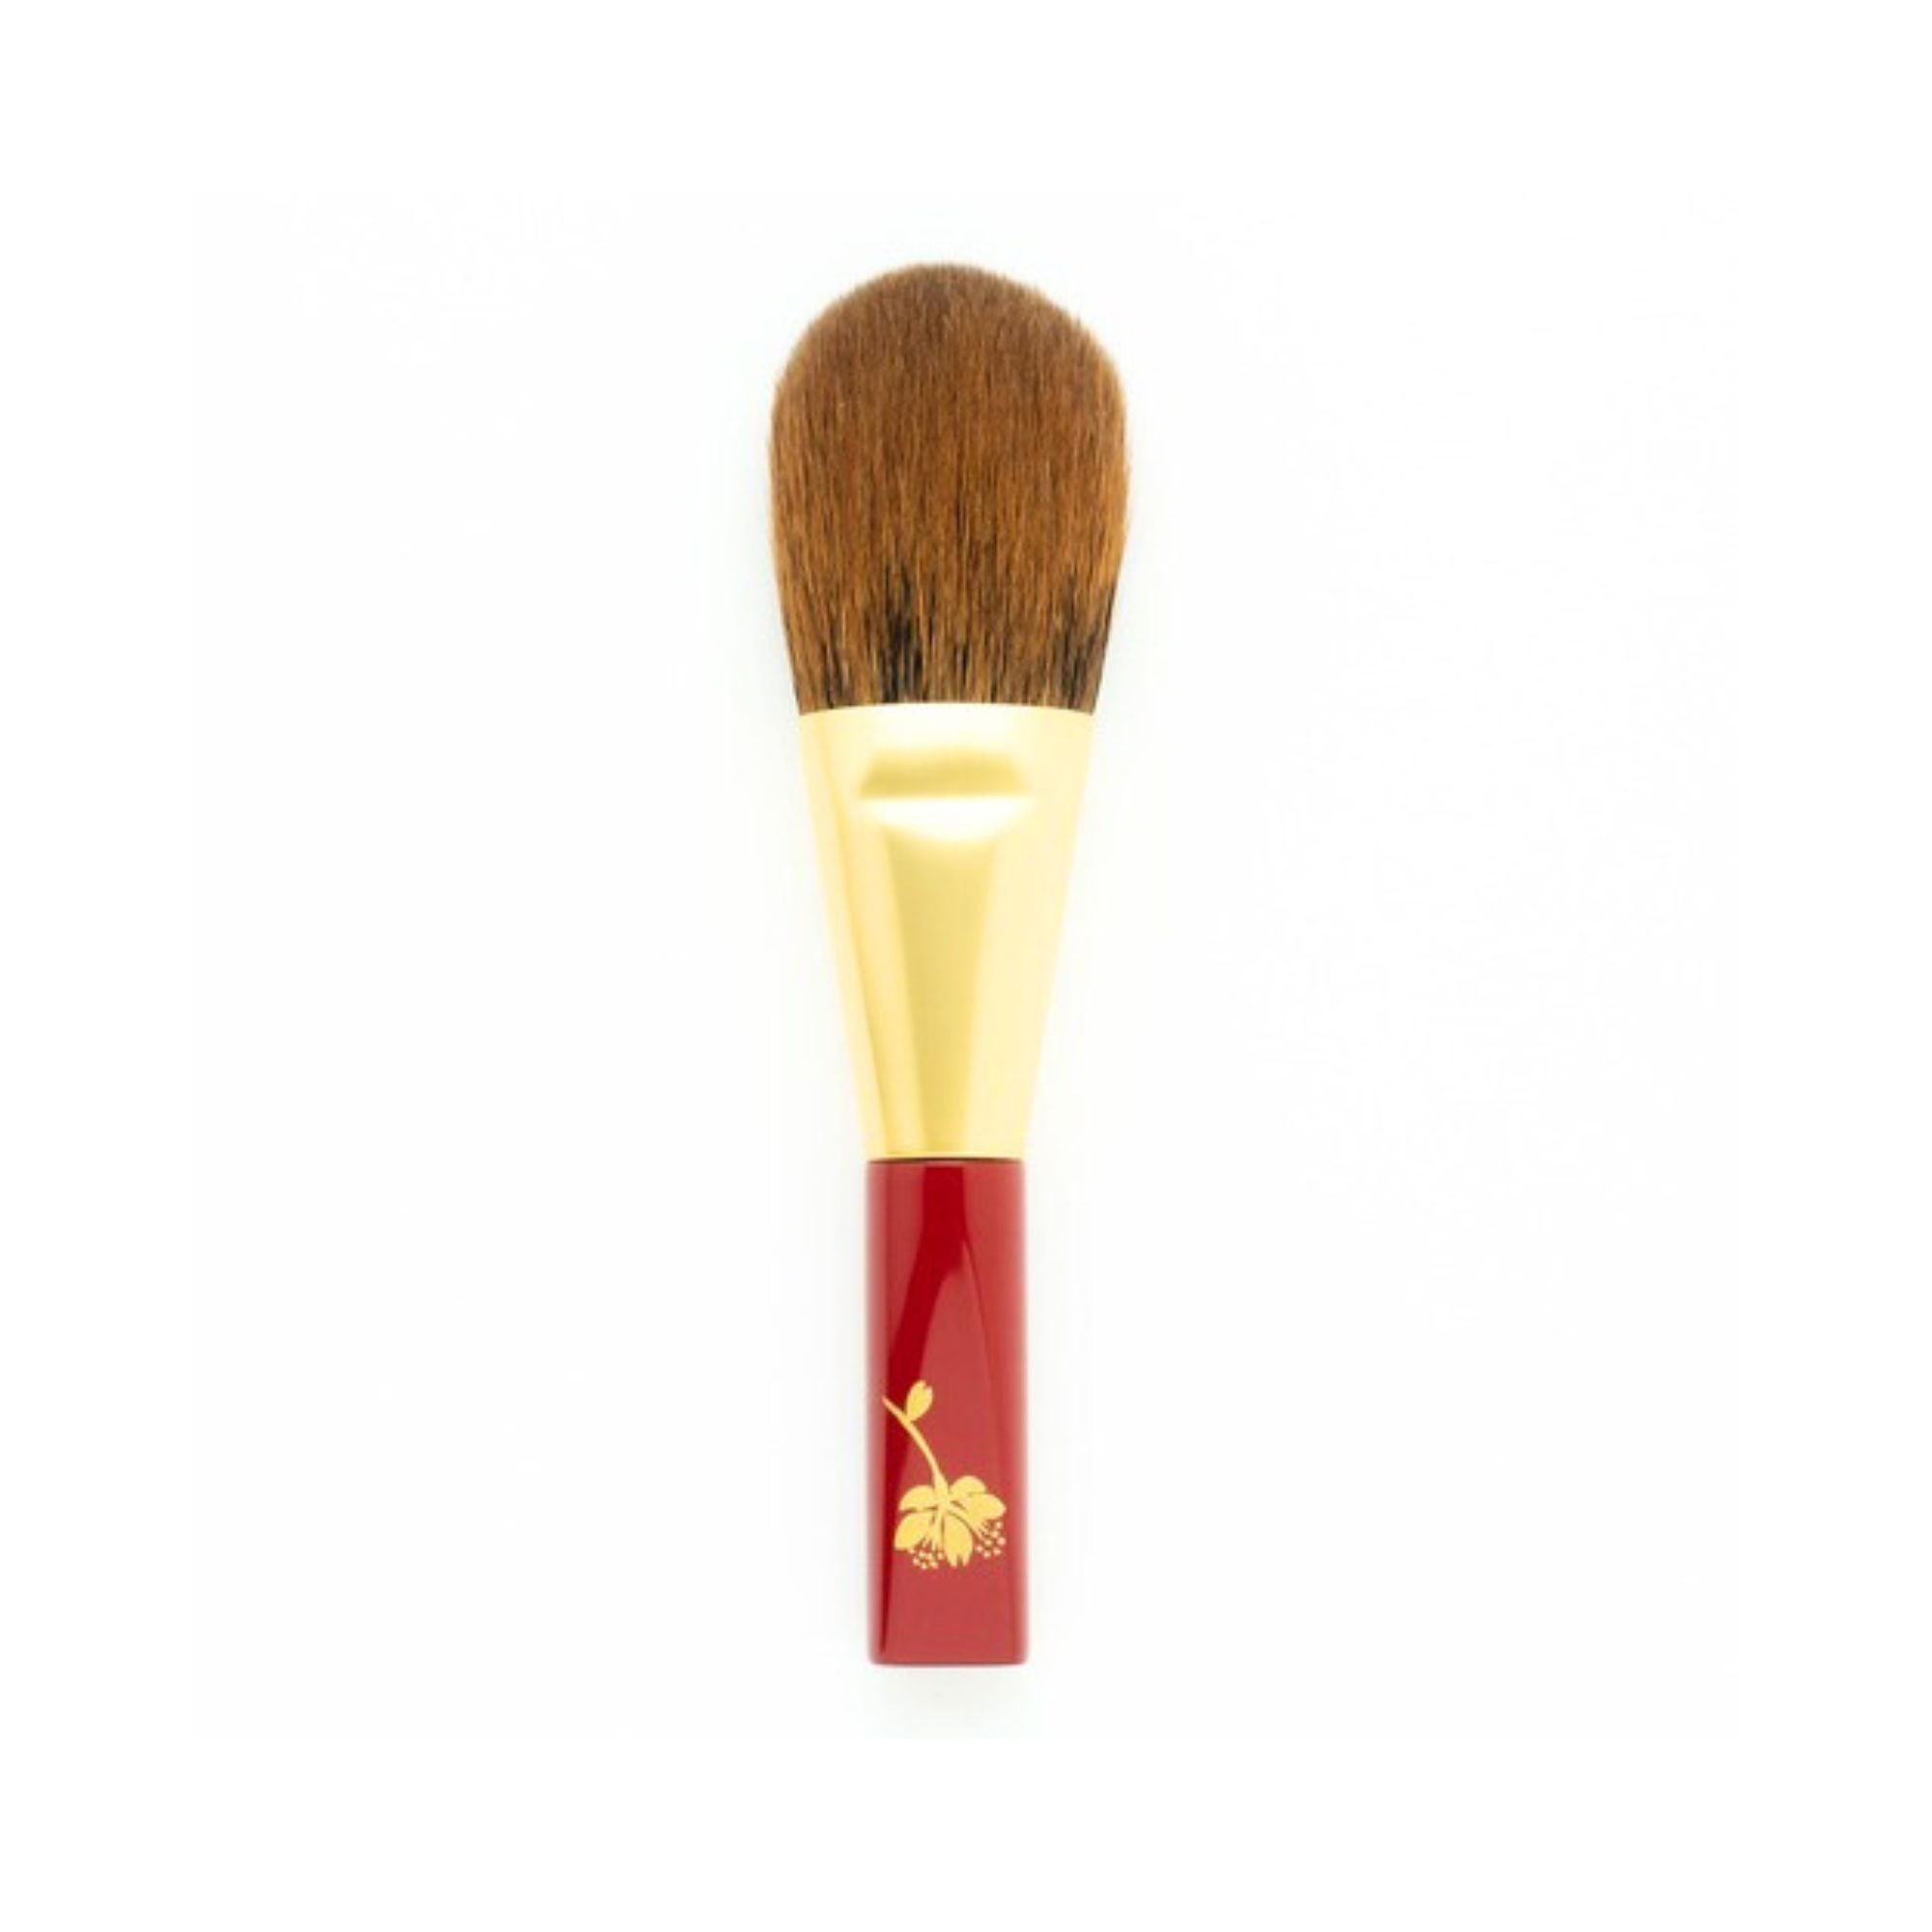 Koyudo RCS Small Powder Brush, Sakura Makie Design - Fude Beauty, Japanese Makeup Brushes